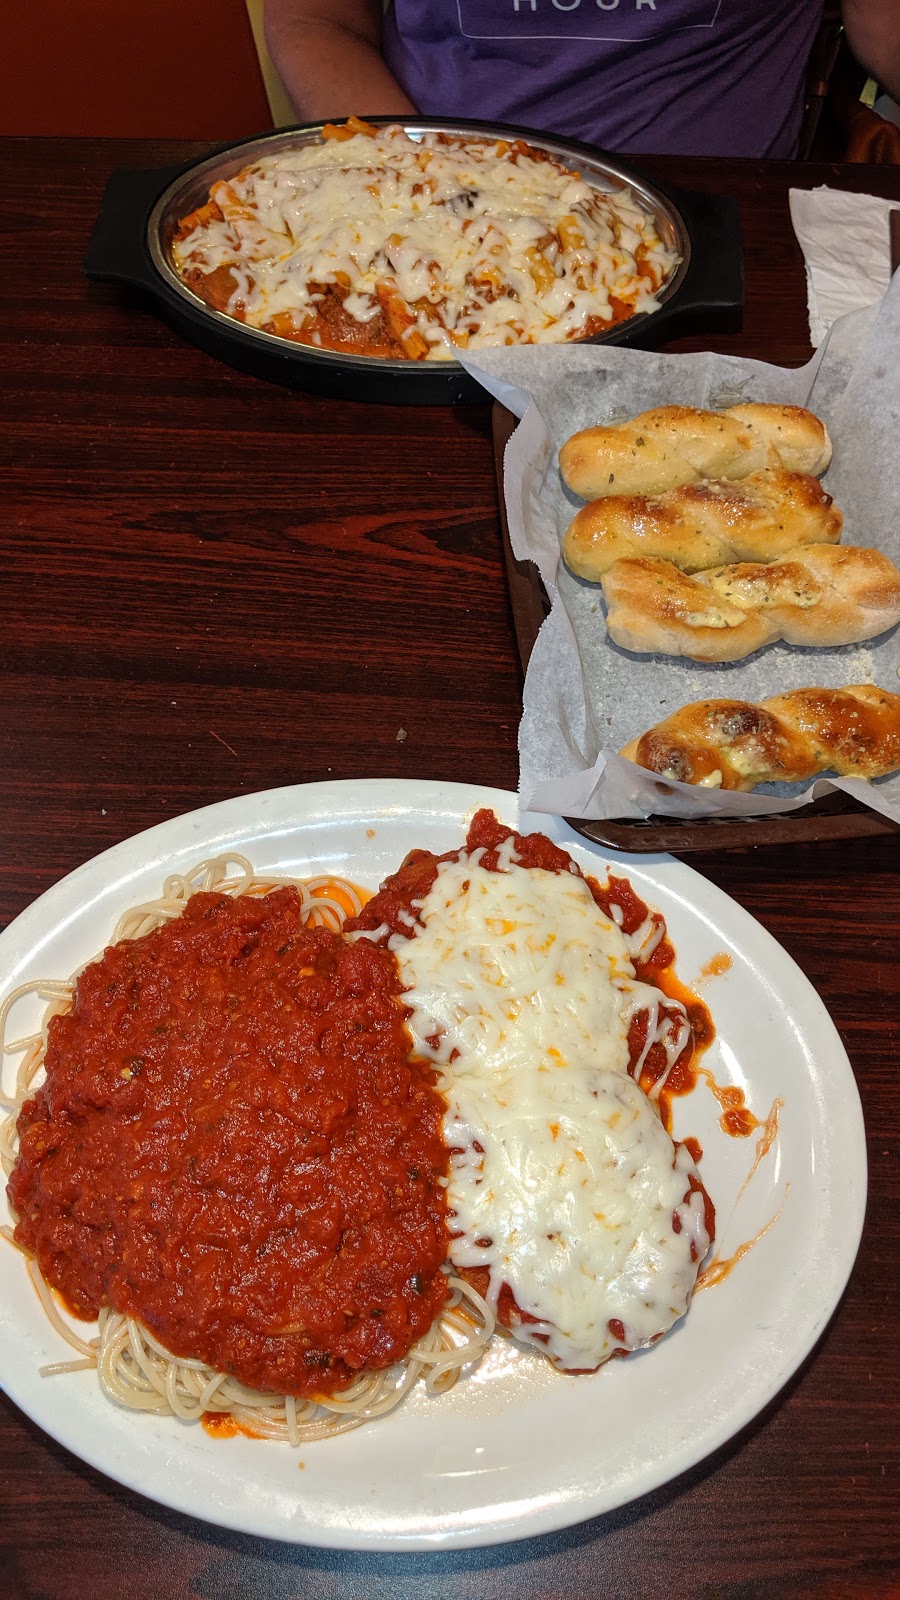 Johns Italian Pizza Restaurant | 122 Sanford Rd, Pittsboro, NC 27312 | Phone: (919) 542-5027